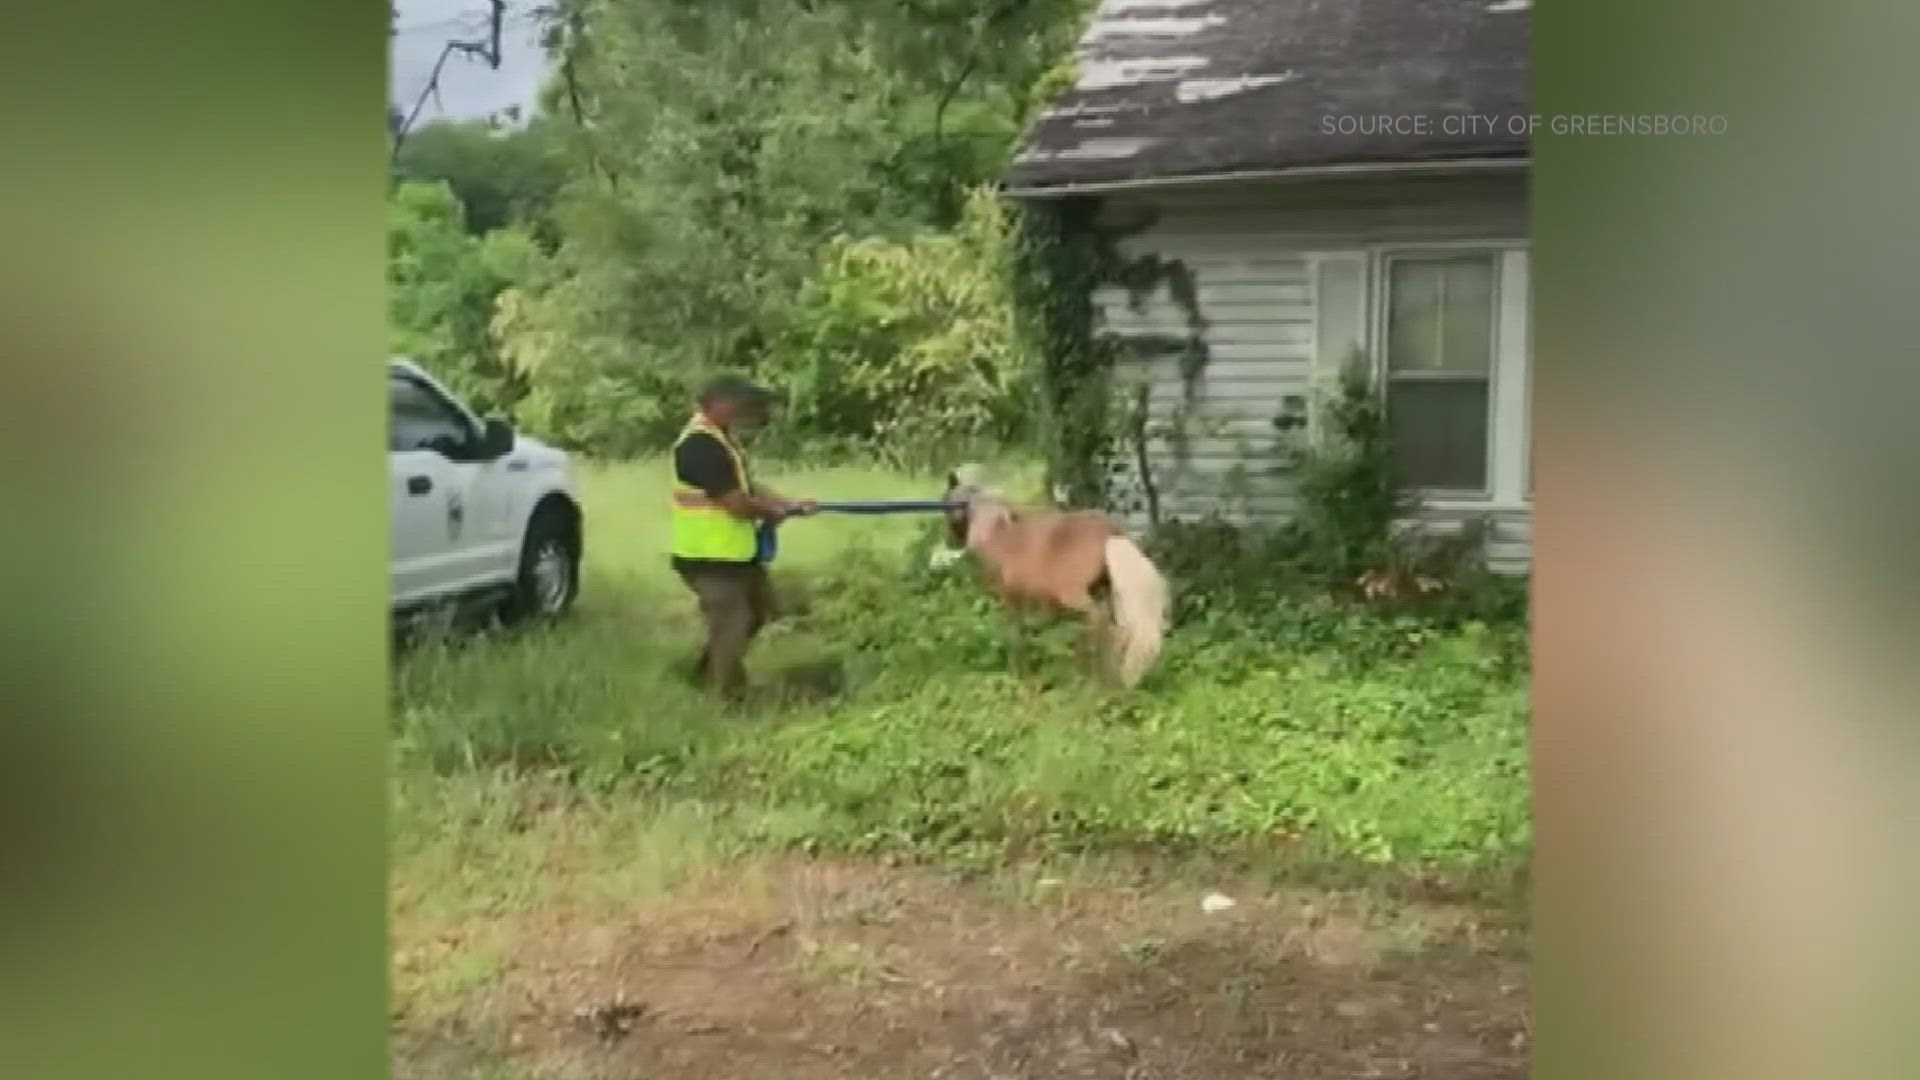 Videos show workers wrangling loose horses near Vandalia Elementary School.